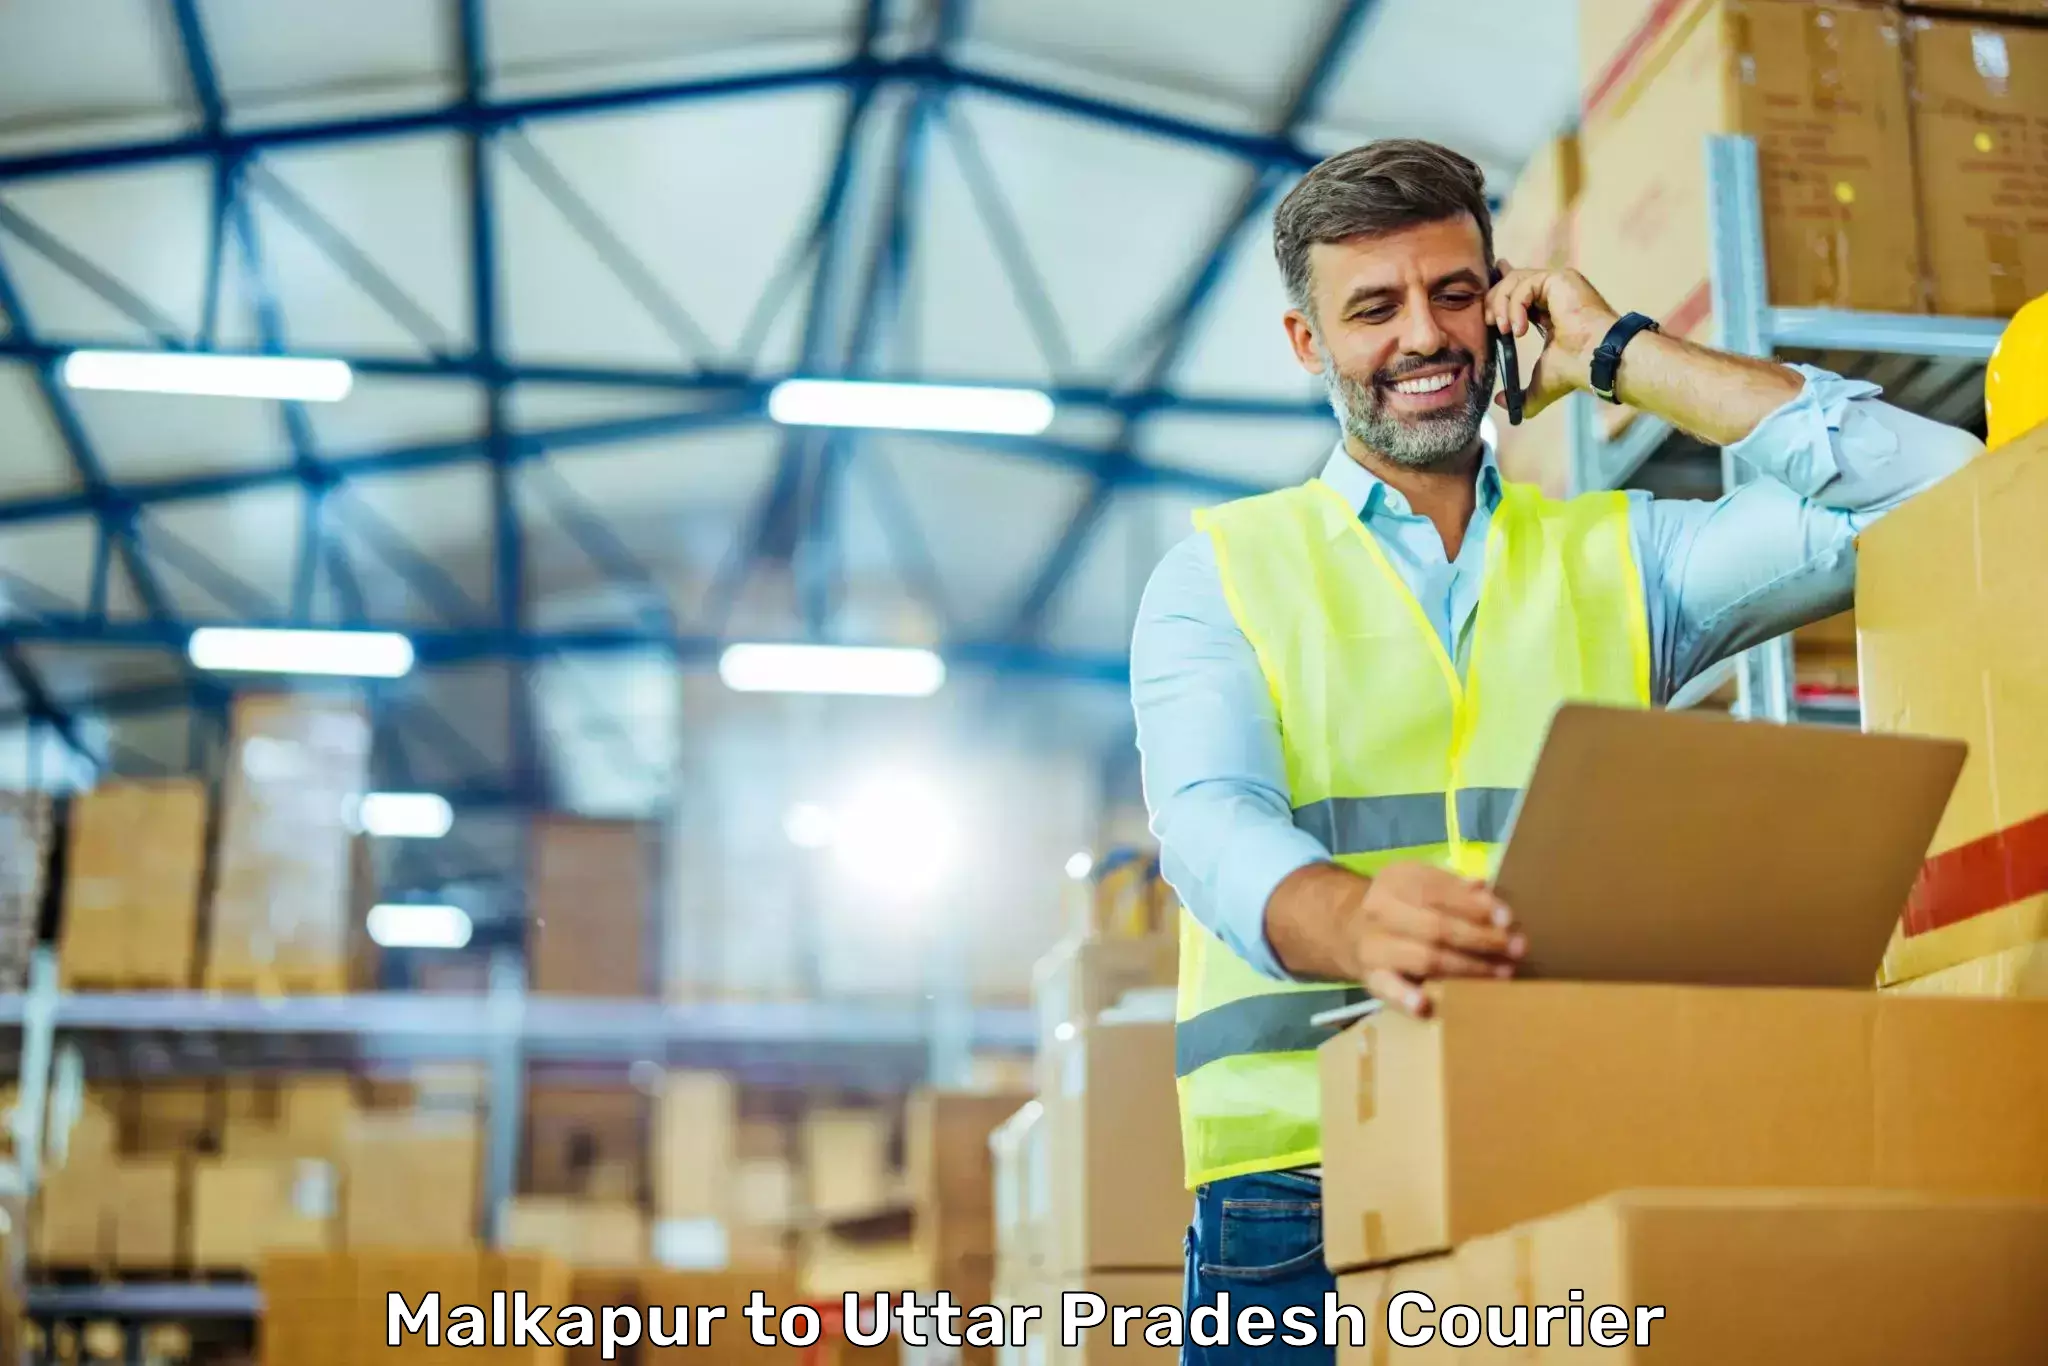 Courier service innovation Malkapur to Vrindavan